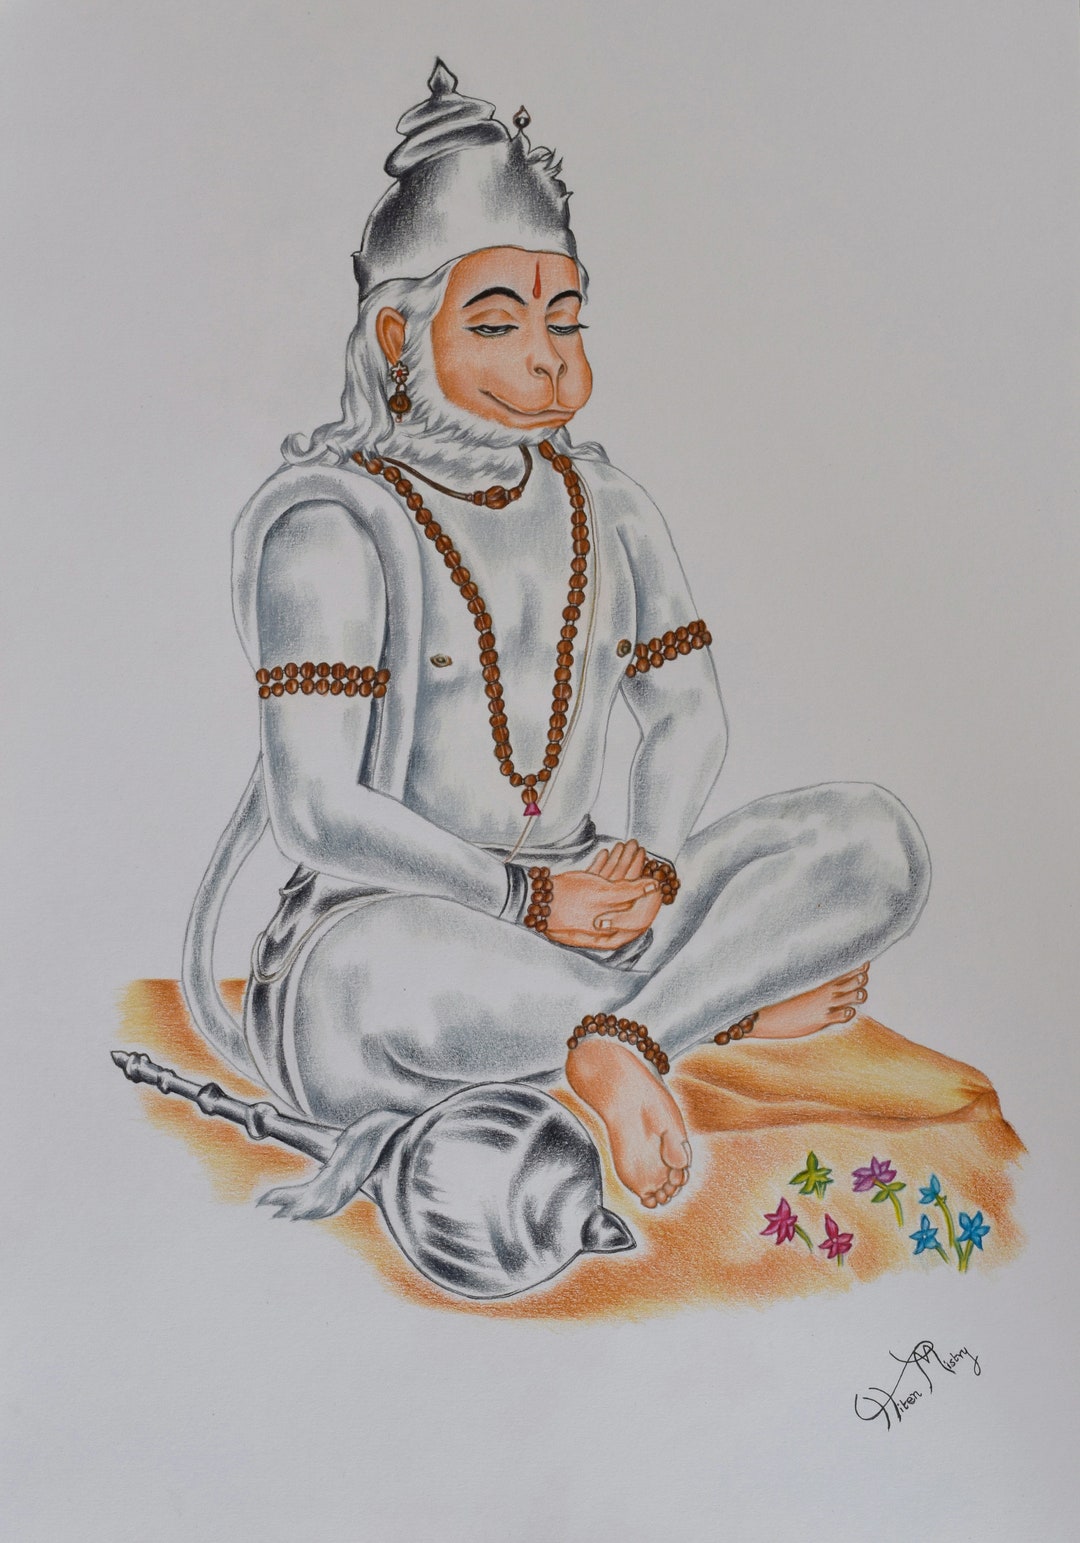 Buy Original Hanuman Drawing Online in India - Etsy